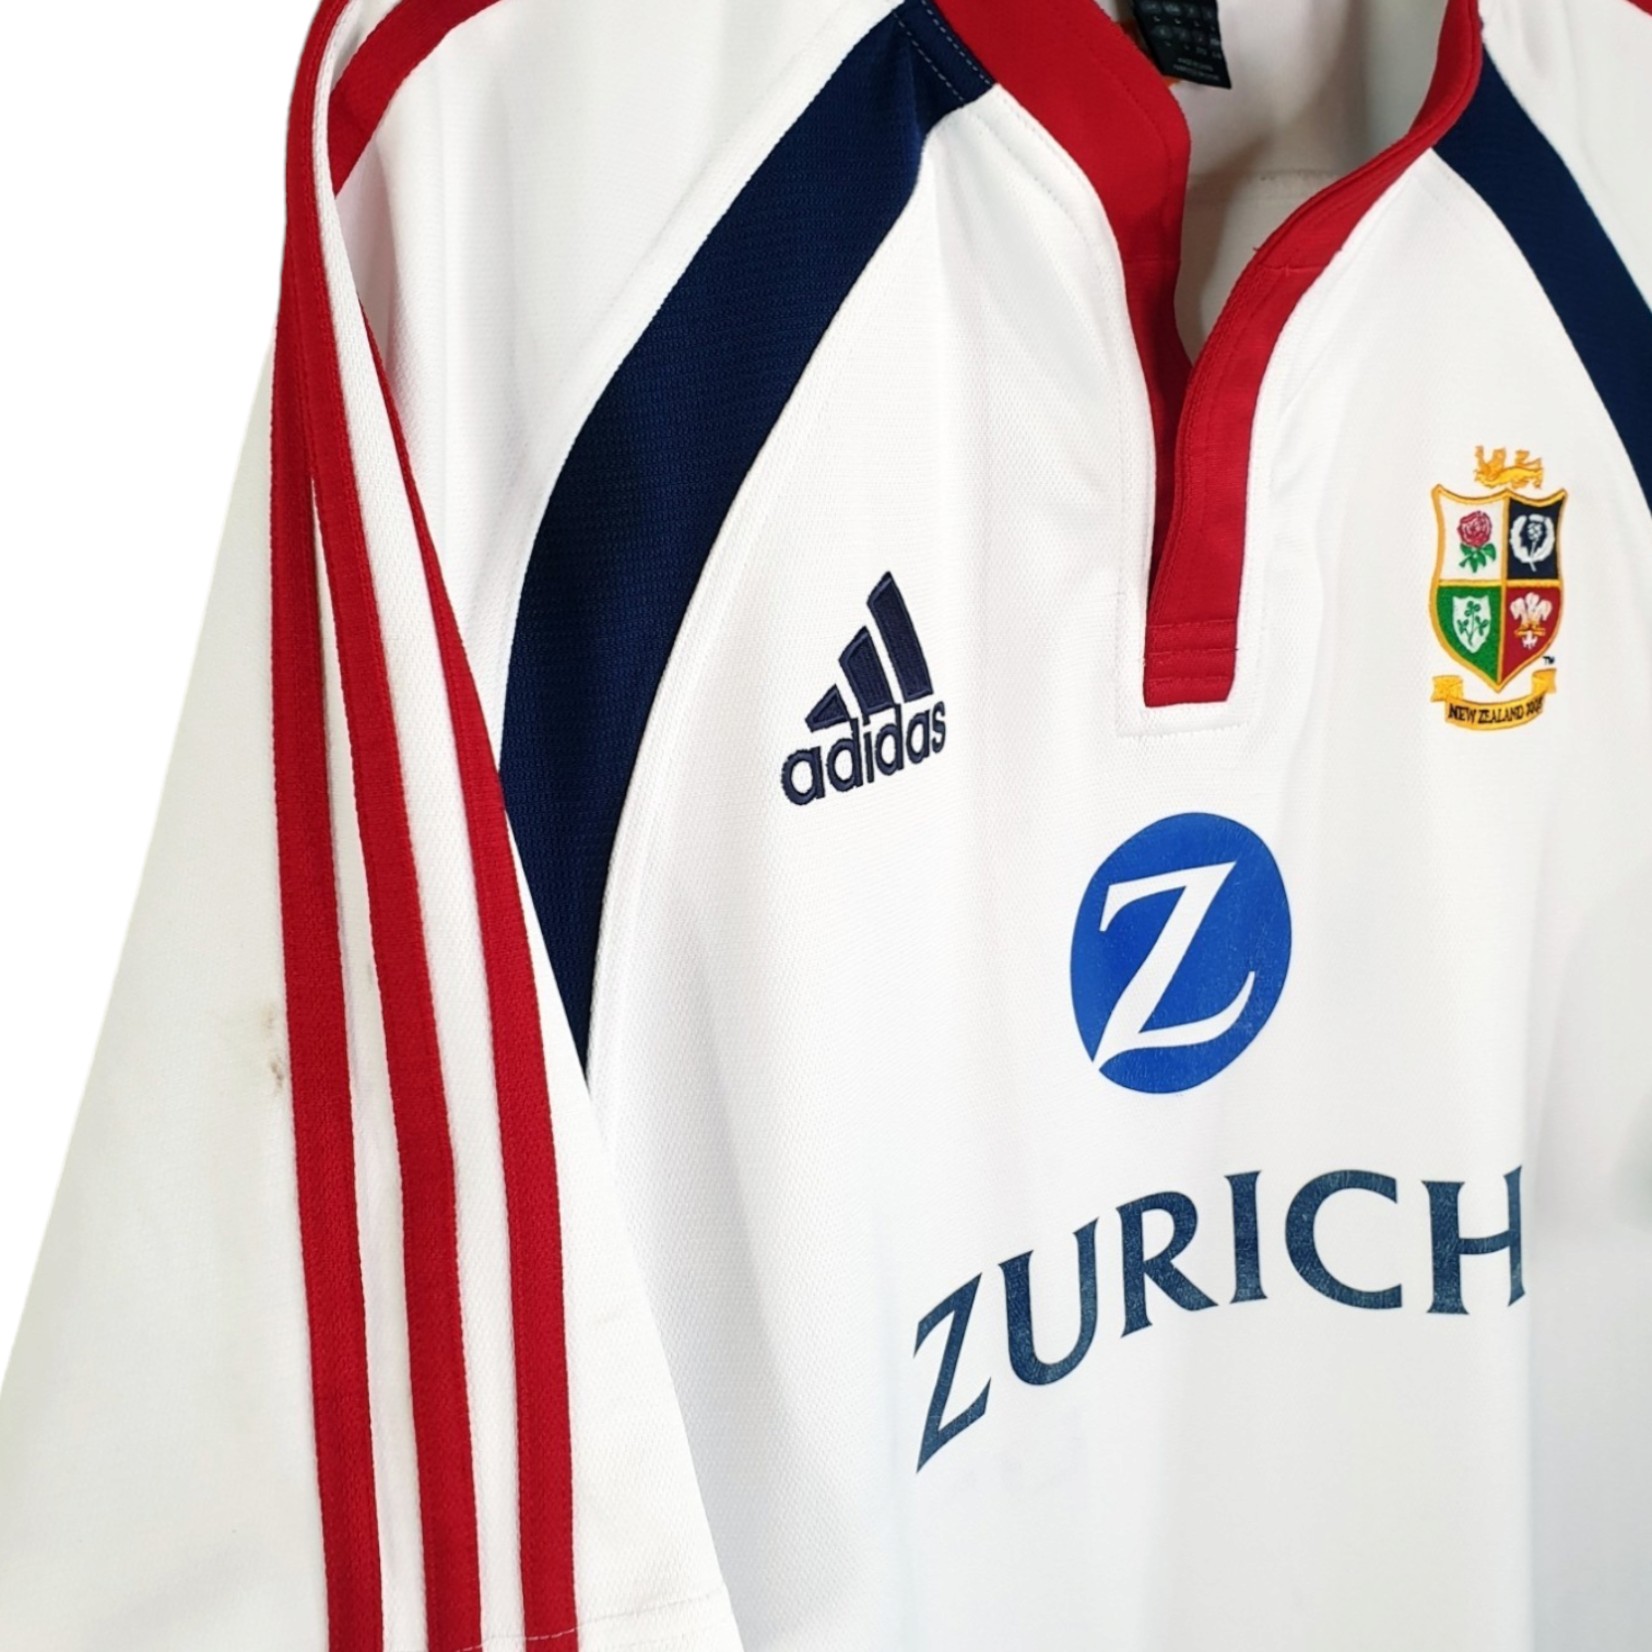 Adidas Adidas Vintage Rugby-Shirt British & Irish Lions 2005